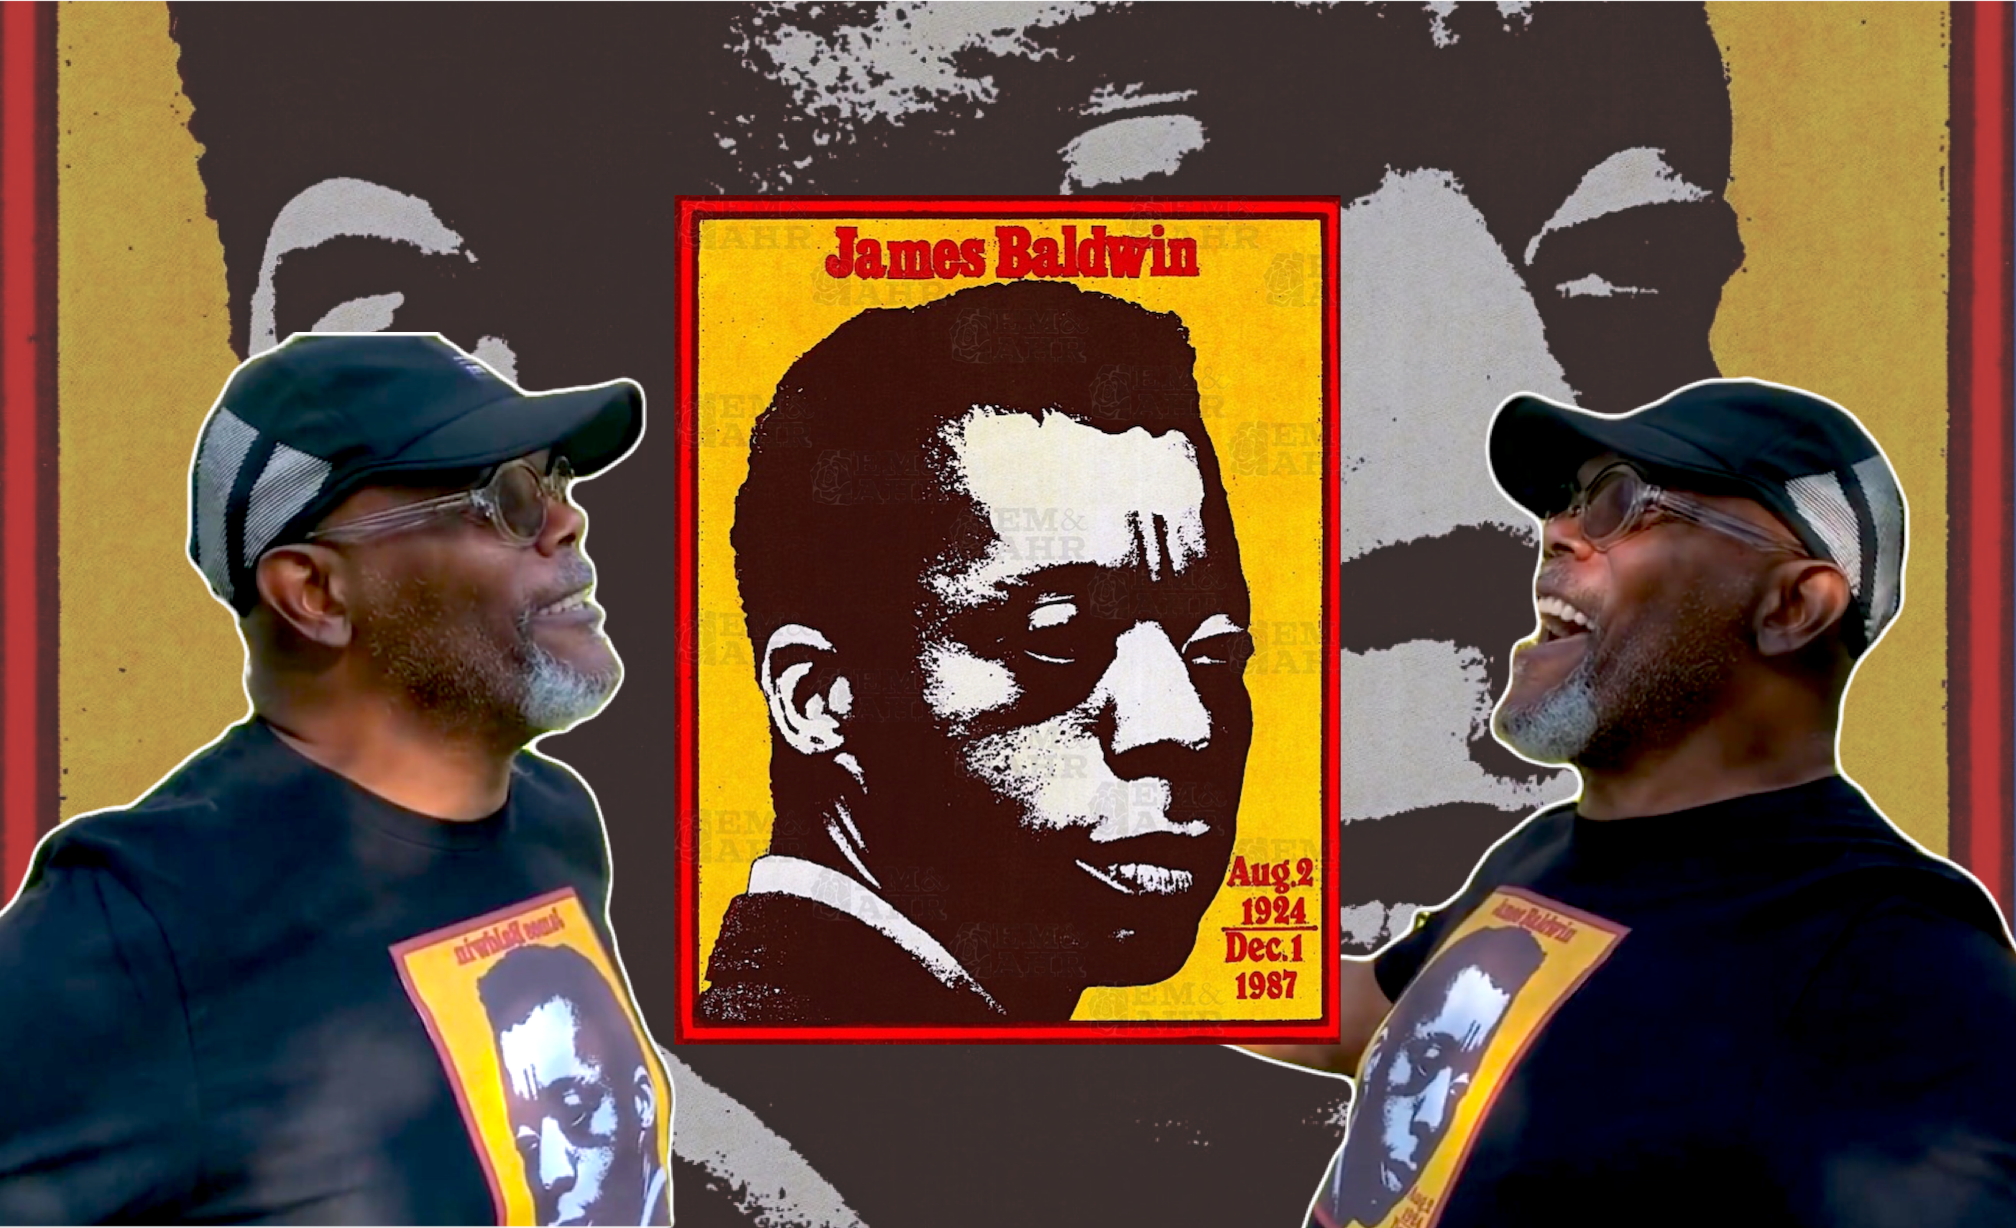 Samuel L Jackson and James Baldwin